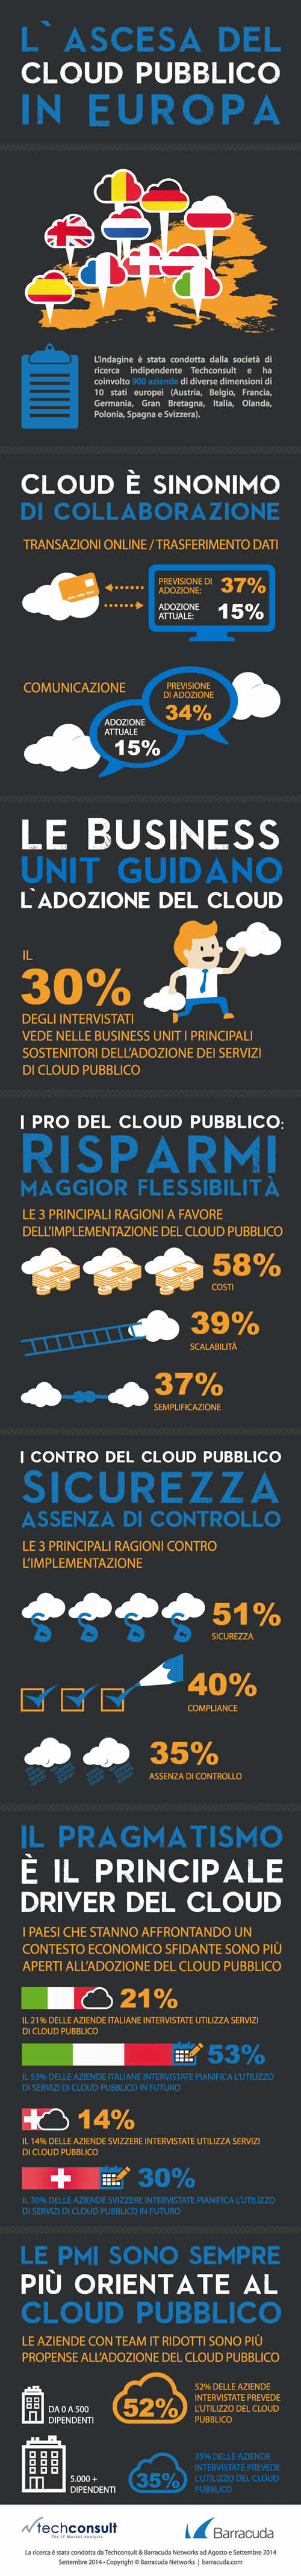 INFOGRAFICA_cloud pubblico